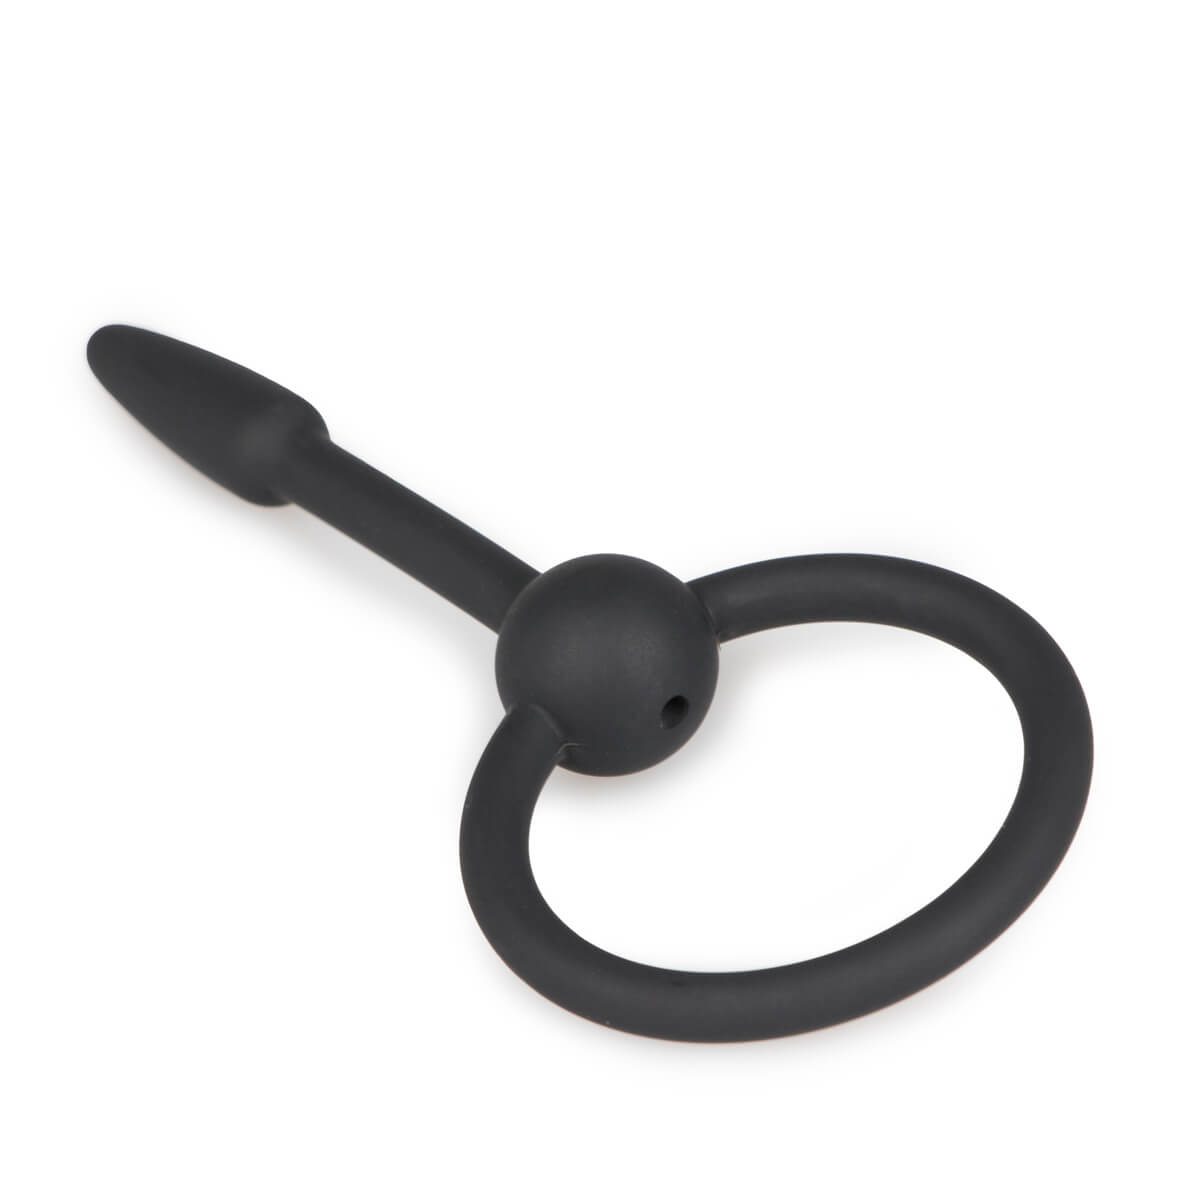 Sinner Gear Small Silicone Penis Plug With Pull Ring - malý dutý silikonový dilatátor